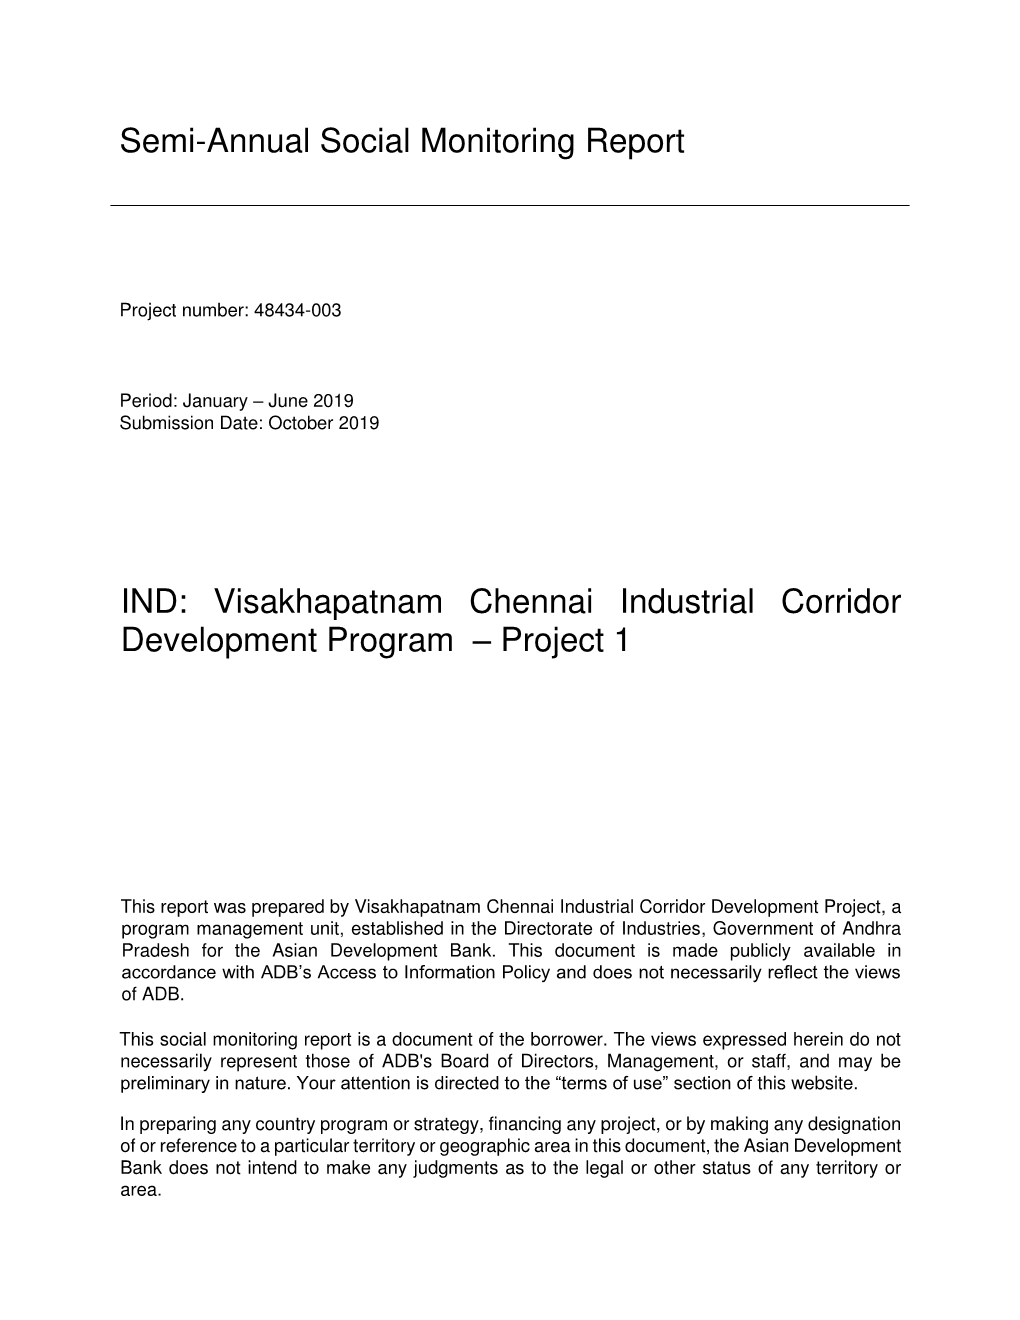 Visakhapatnam-Chennai Industrial Corridor Development Program(VCICDP) Page 1